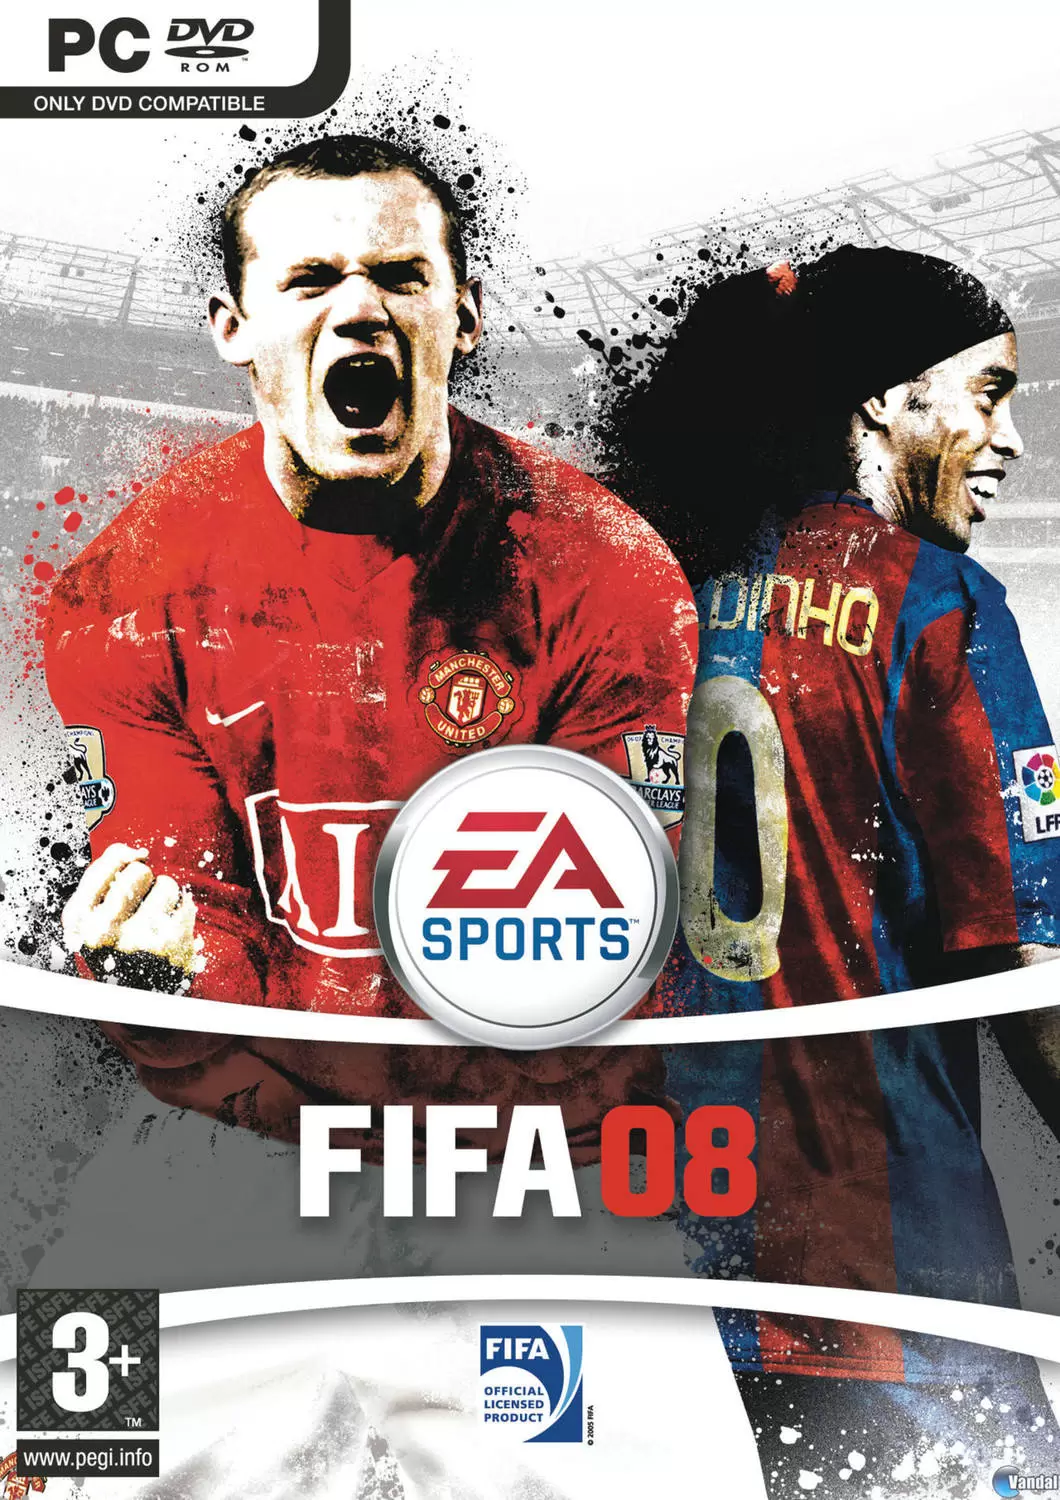 PC Games - Fifa 08